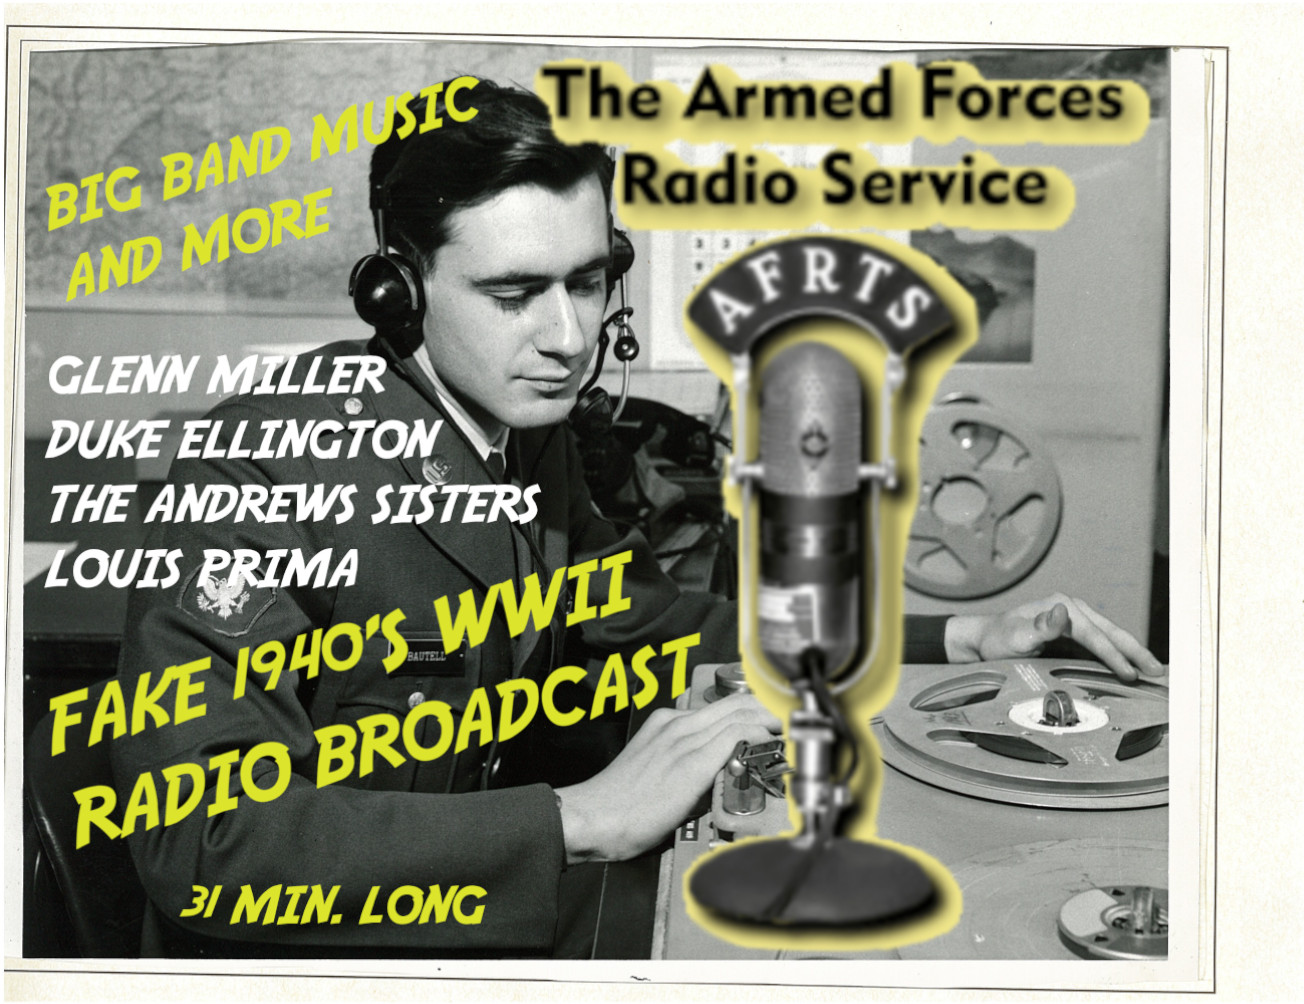 1940's Fake Radio Broadcast